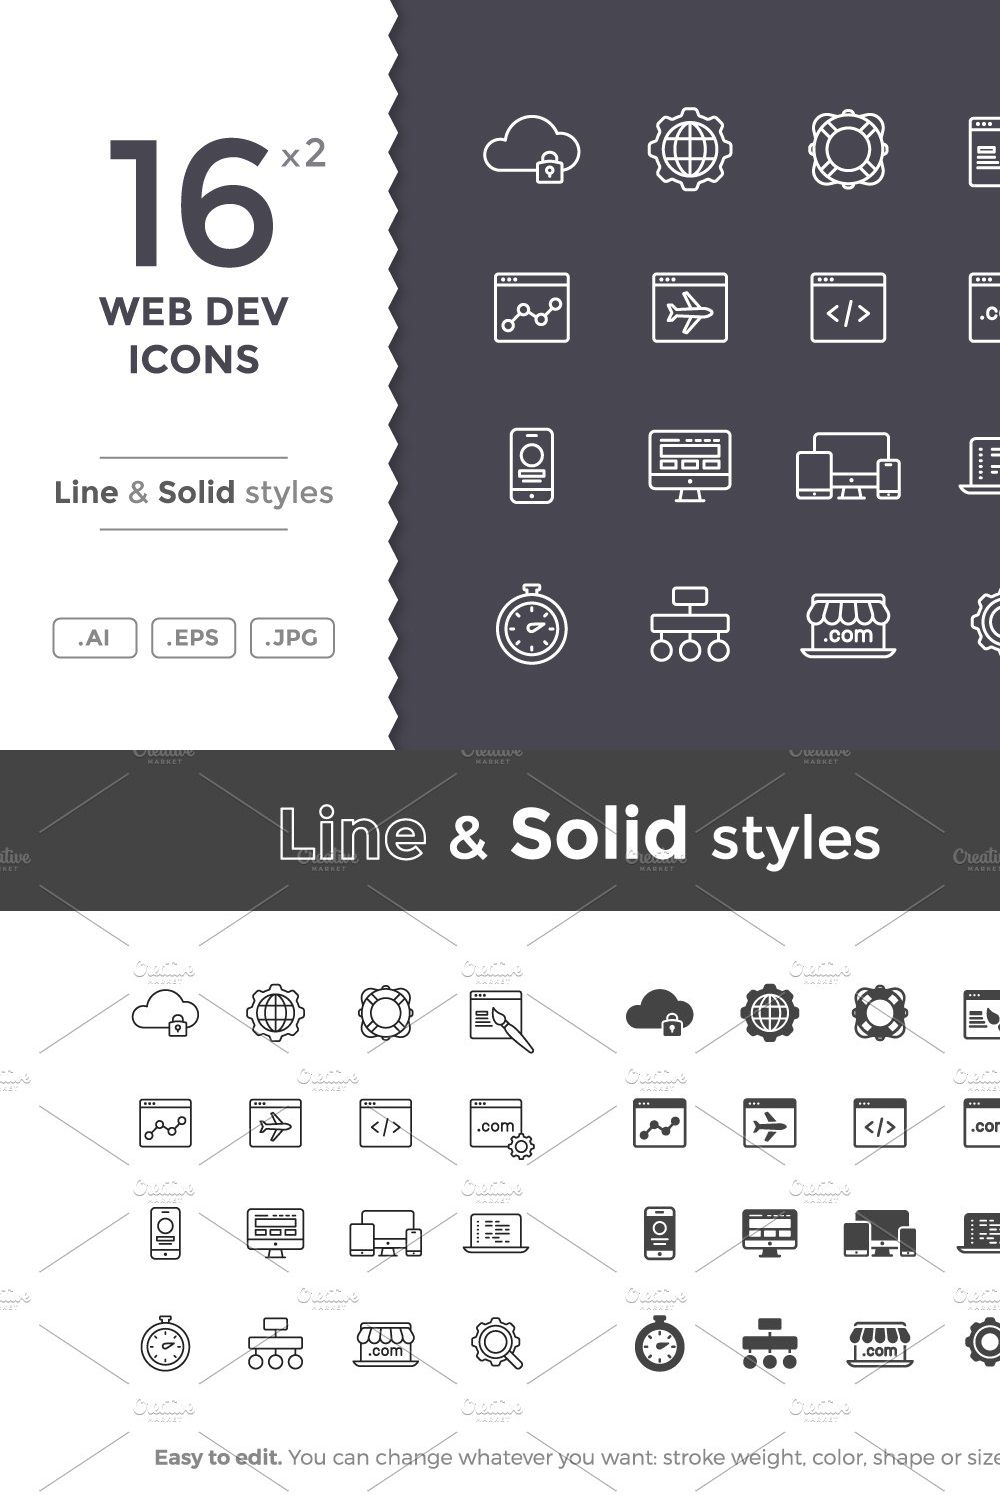 Web Development Icons pinterest preview image.